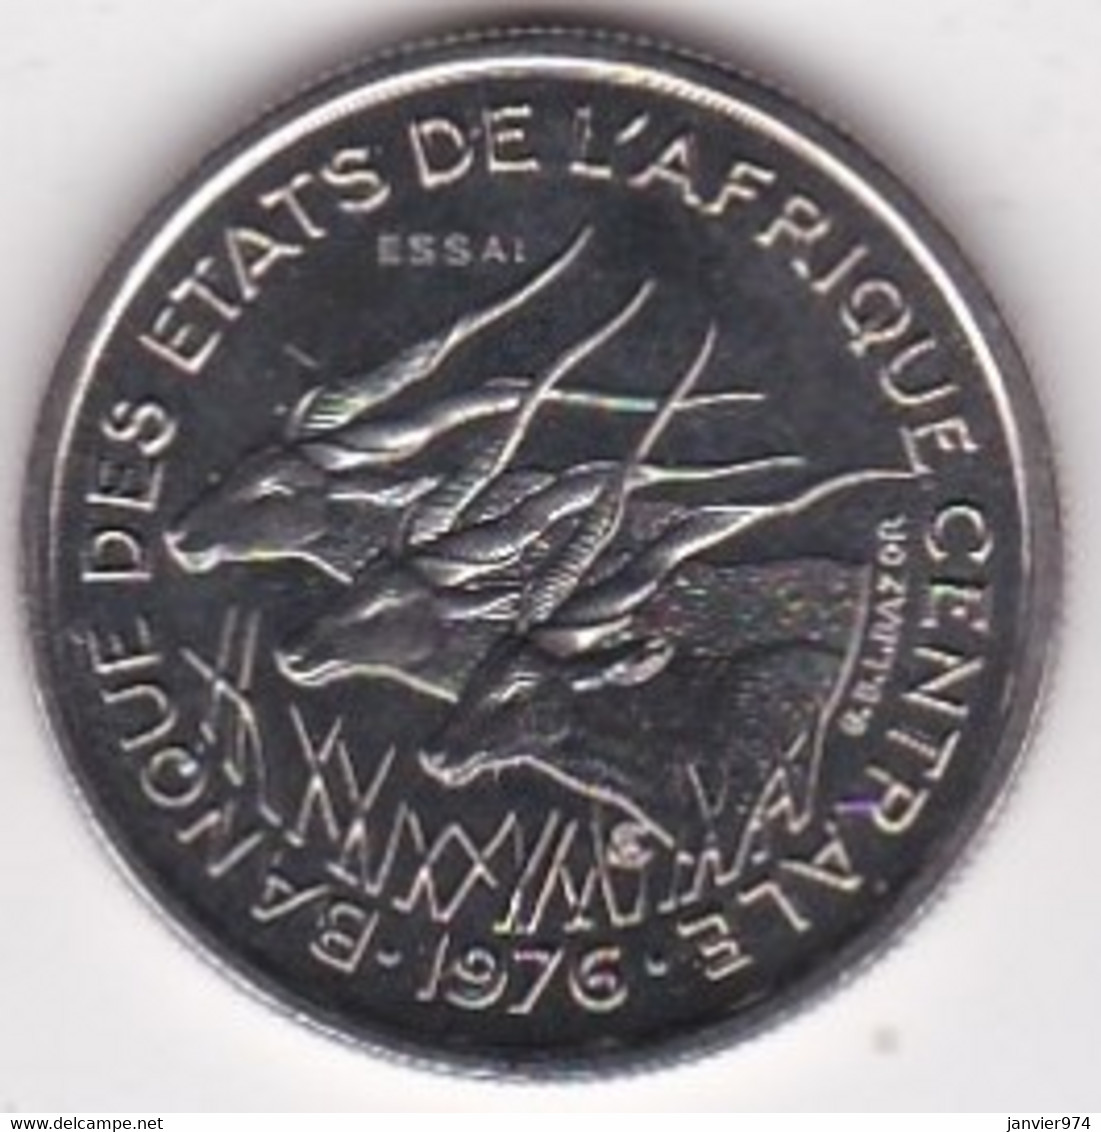 Republique Centrafricaine 50 Francs ESSAI 1976 B. Bronze Aluminium. KM# E 8 - Zentralafrik. Republik